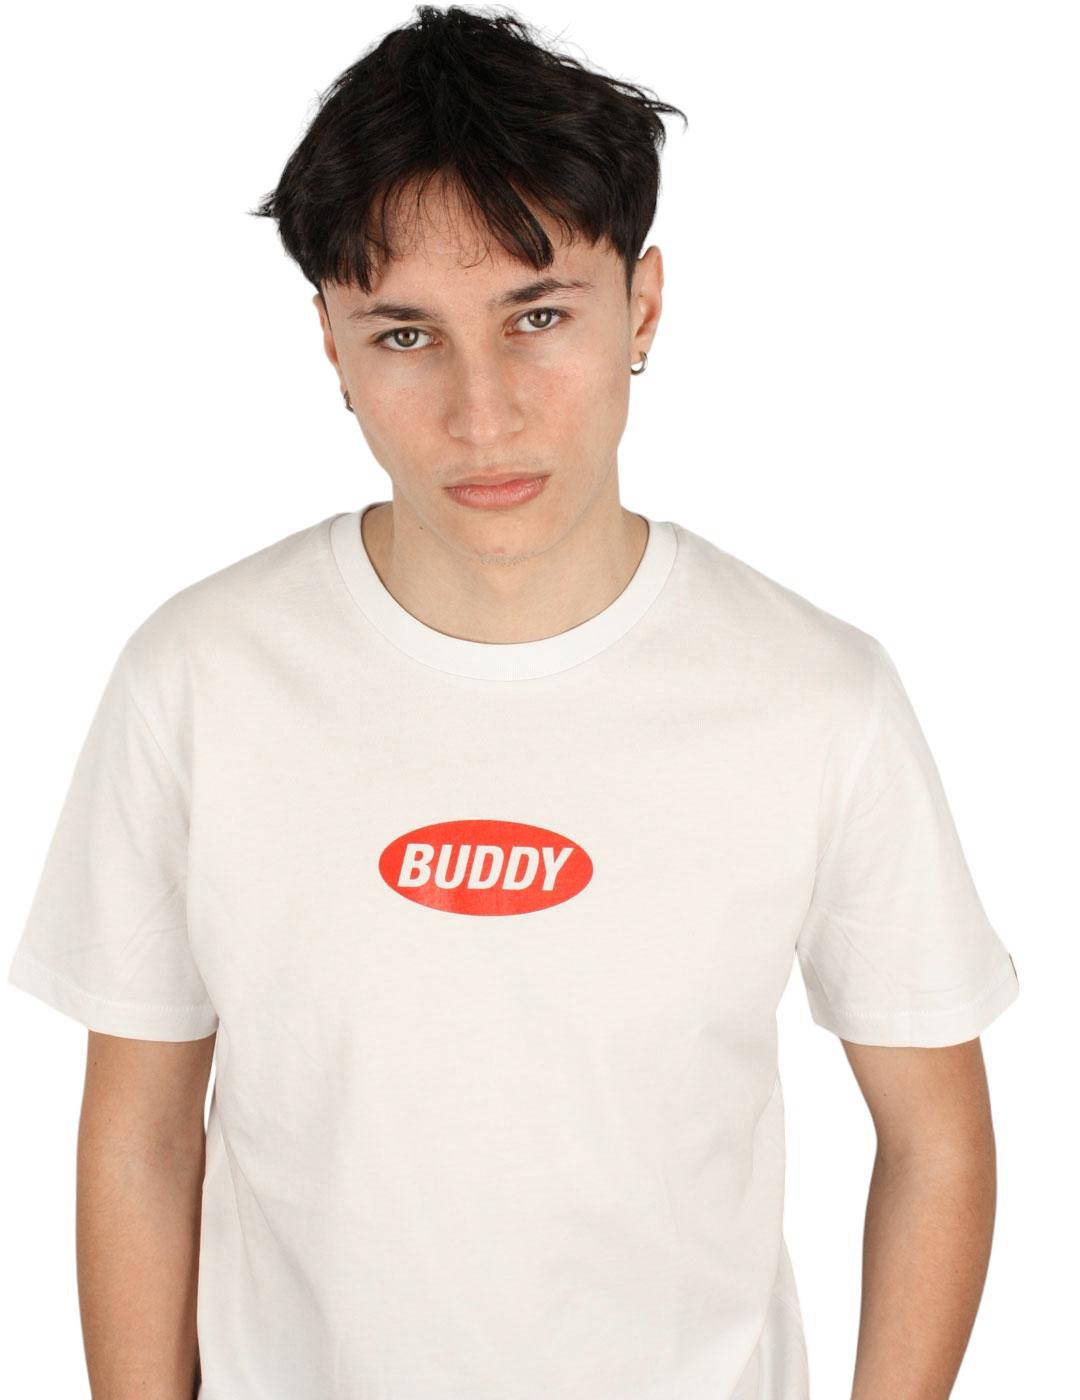 Camiseta Buddy Eco Friendly blanca